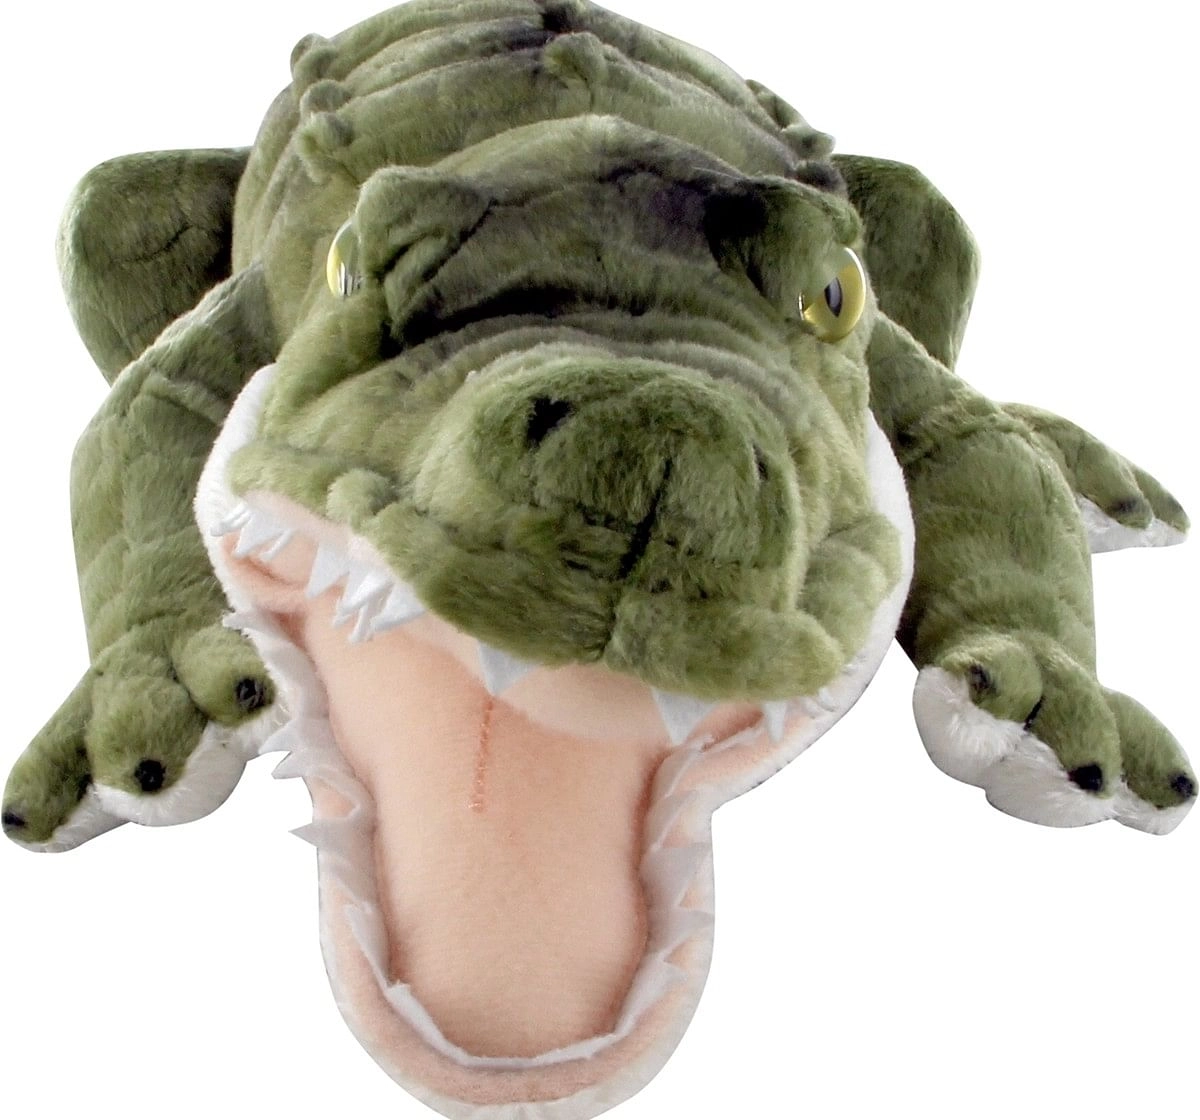  Hamleys Alligator Soft Toy (Green) Animals & Birds for Kids age 2Y+ - 11.6 Cm (Green)